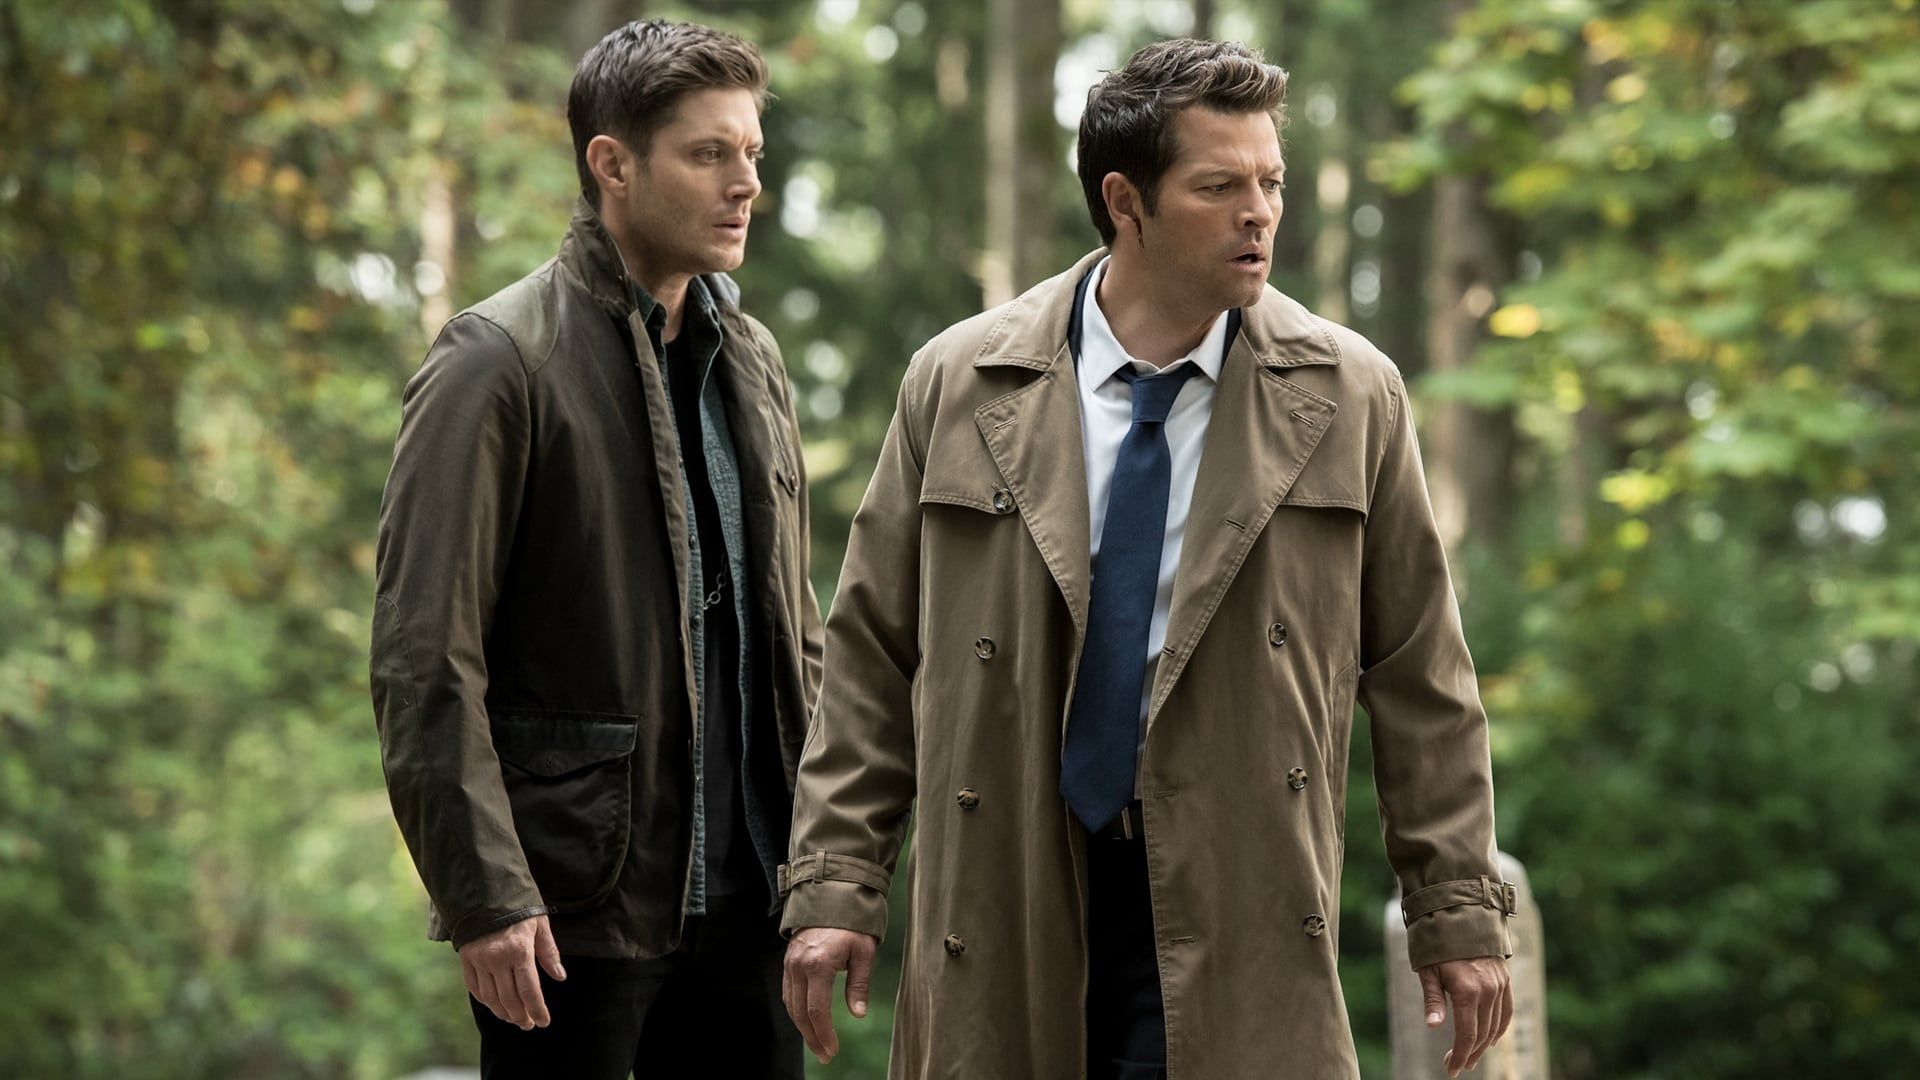 Supernatural Season 15 Ep 6 Golden Time, Watch TV Online